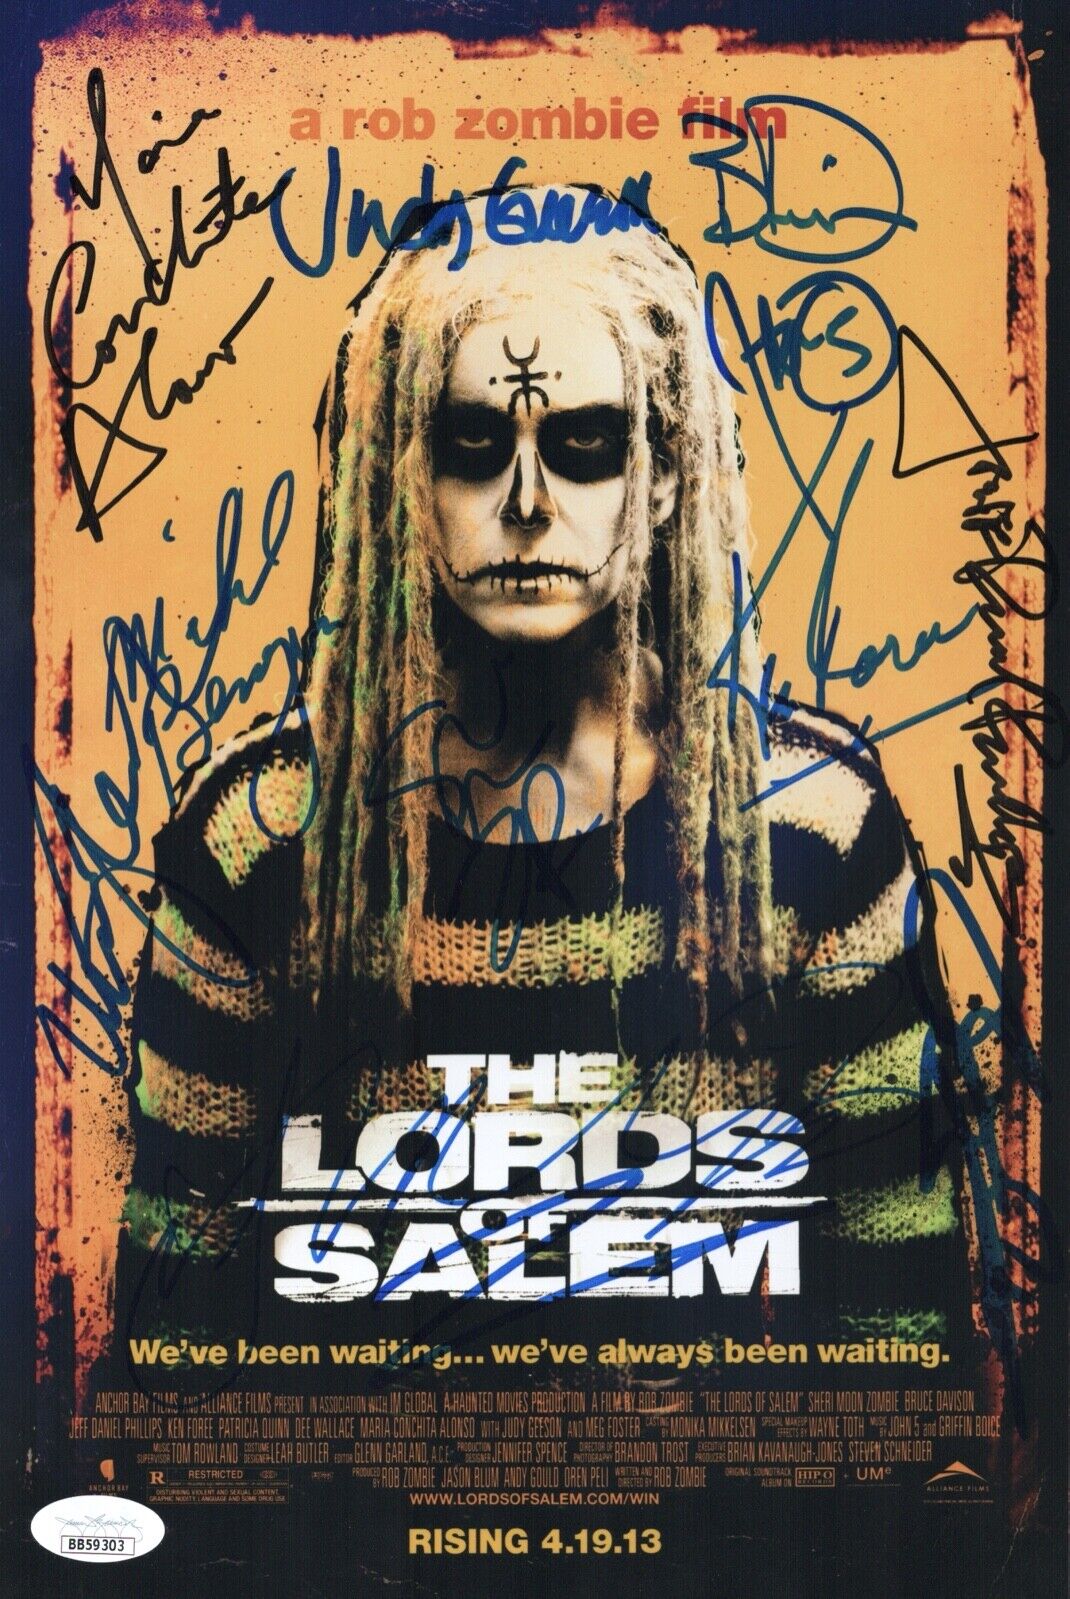 Rob Zombie LORDS OF SALEM CAST X12 Signed 8x12 Photo Poster painting Autograph JSA LOA COA Cert